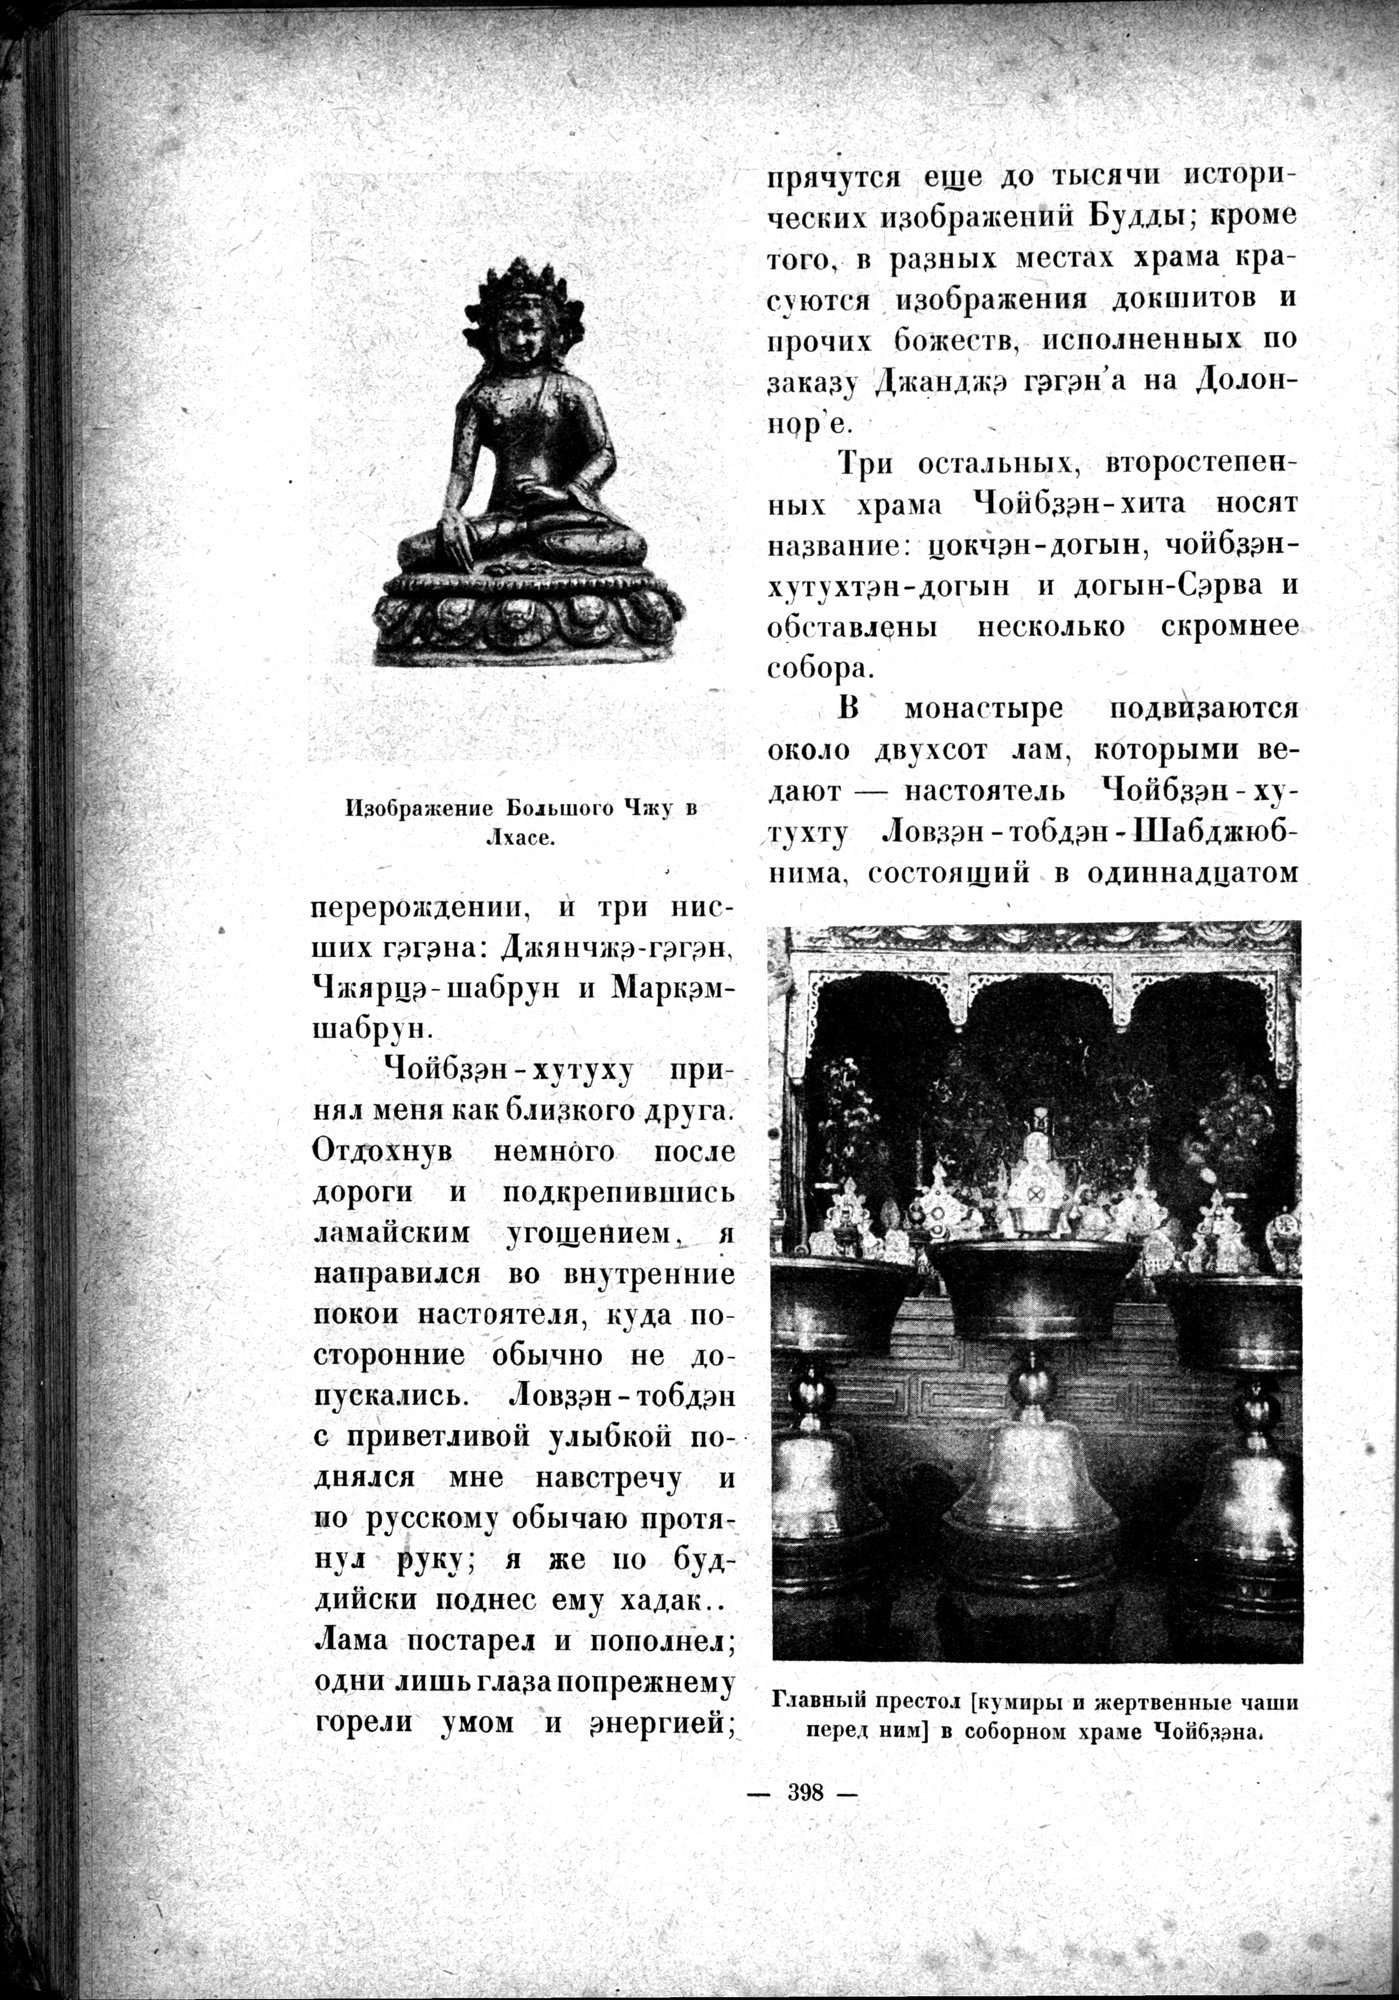 Mongoliya i Amdo i mertby gorod Khara-Khoto : vol.1 / Page 452 (Grayscale High Resolution Image)